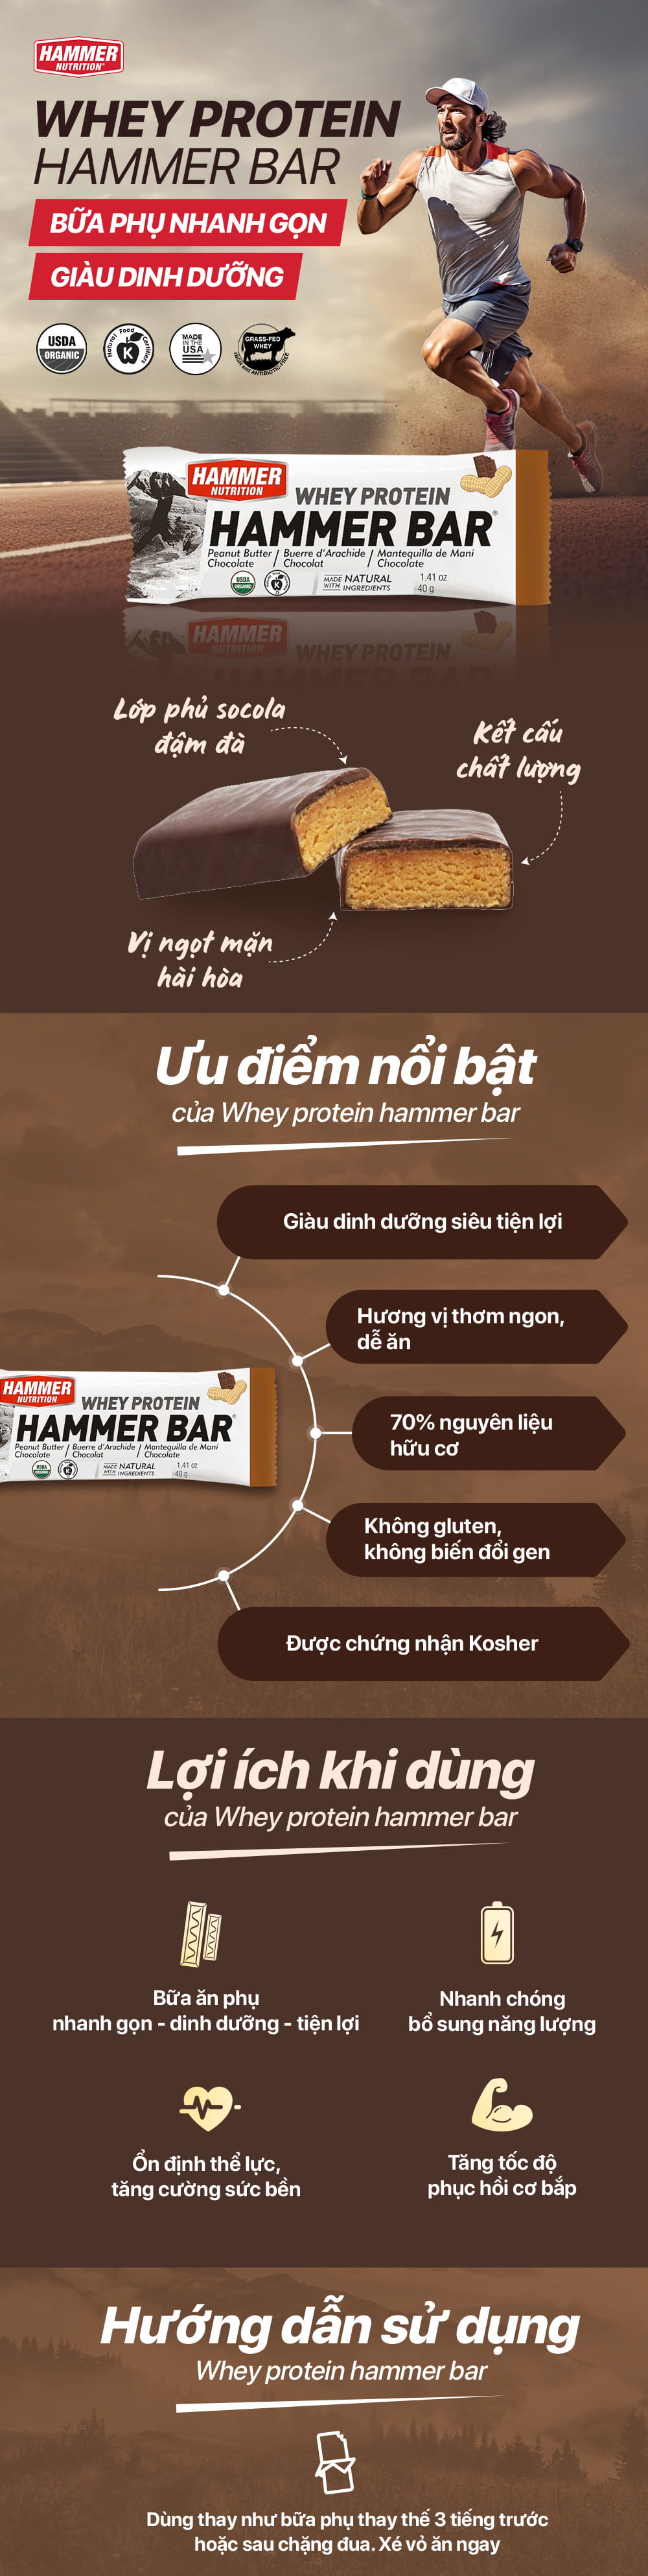 whey-protein-hammer-bar